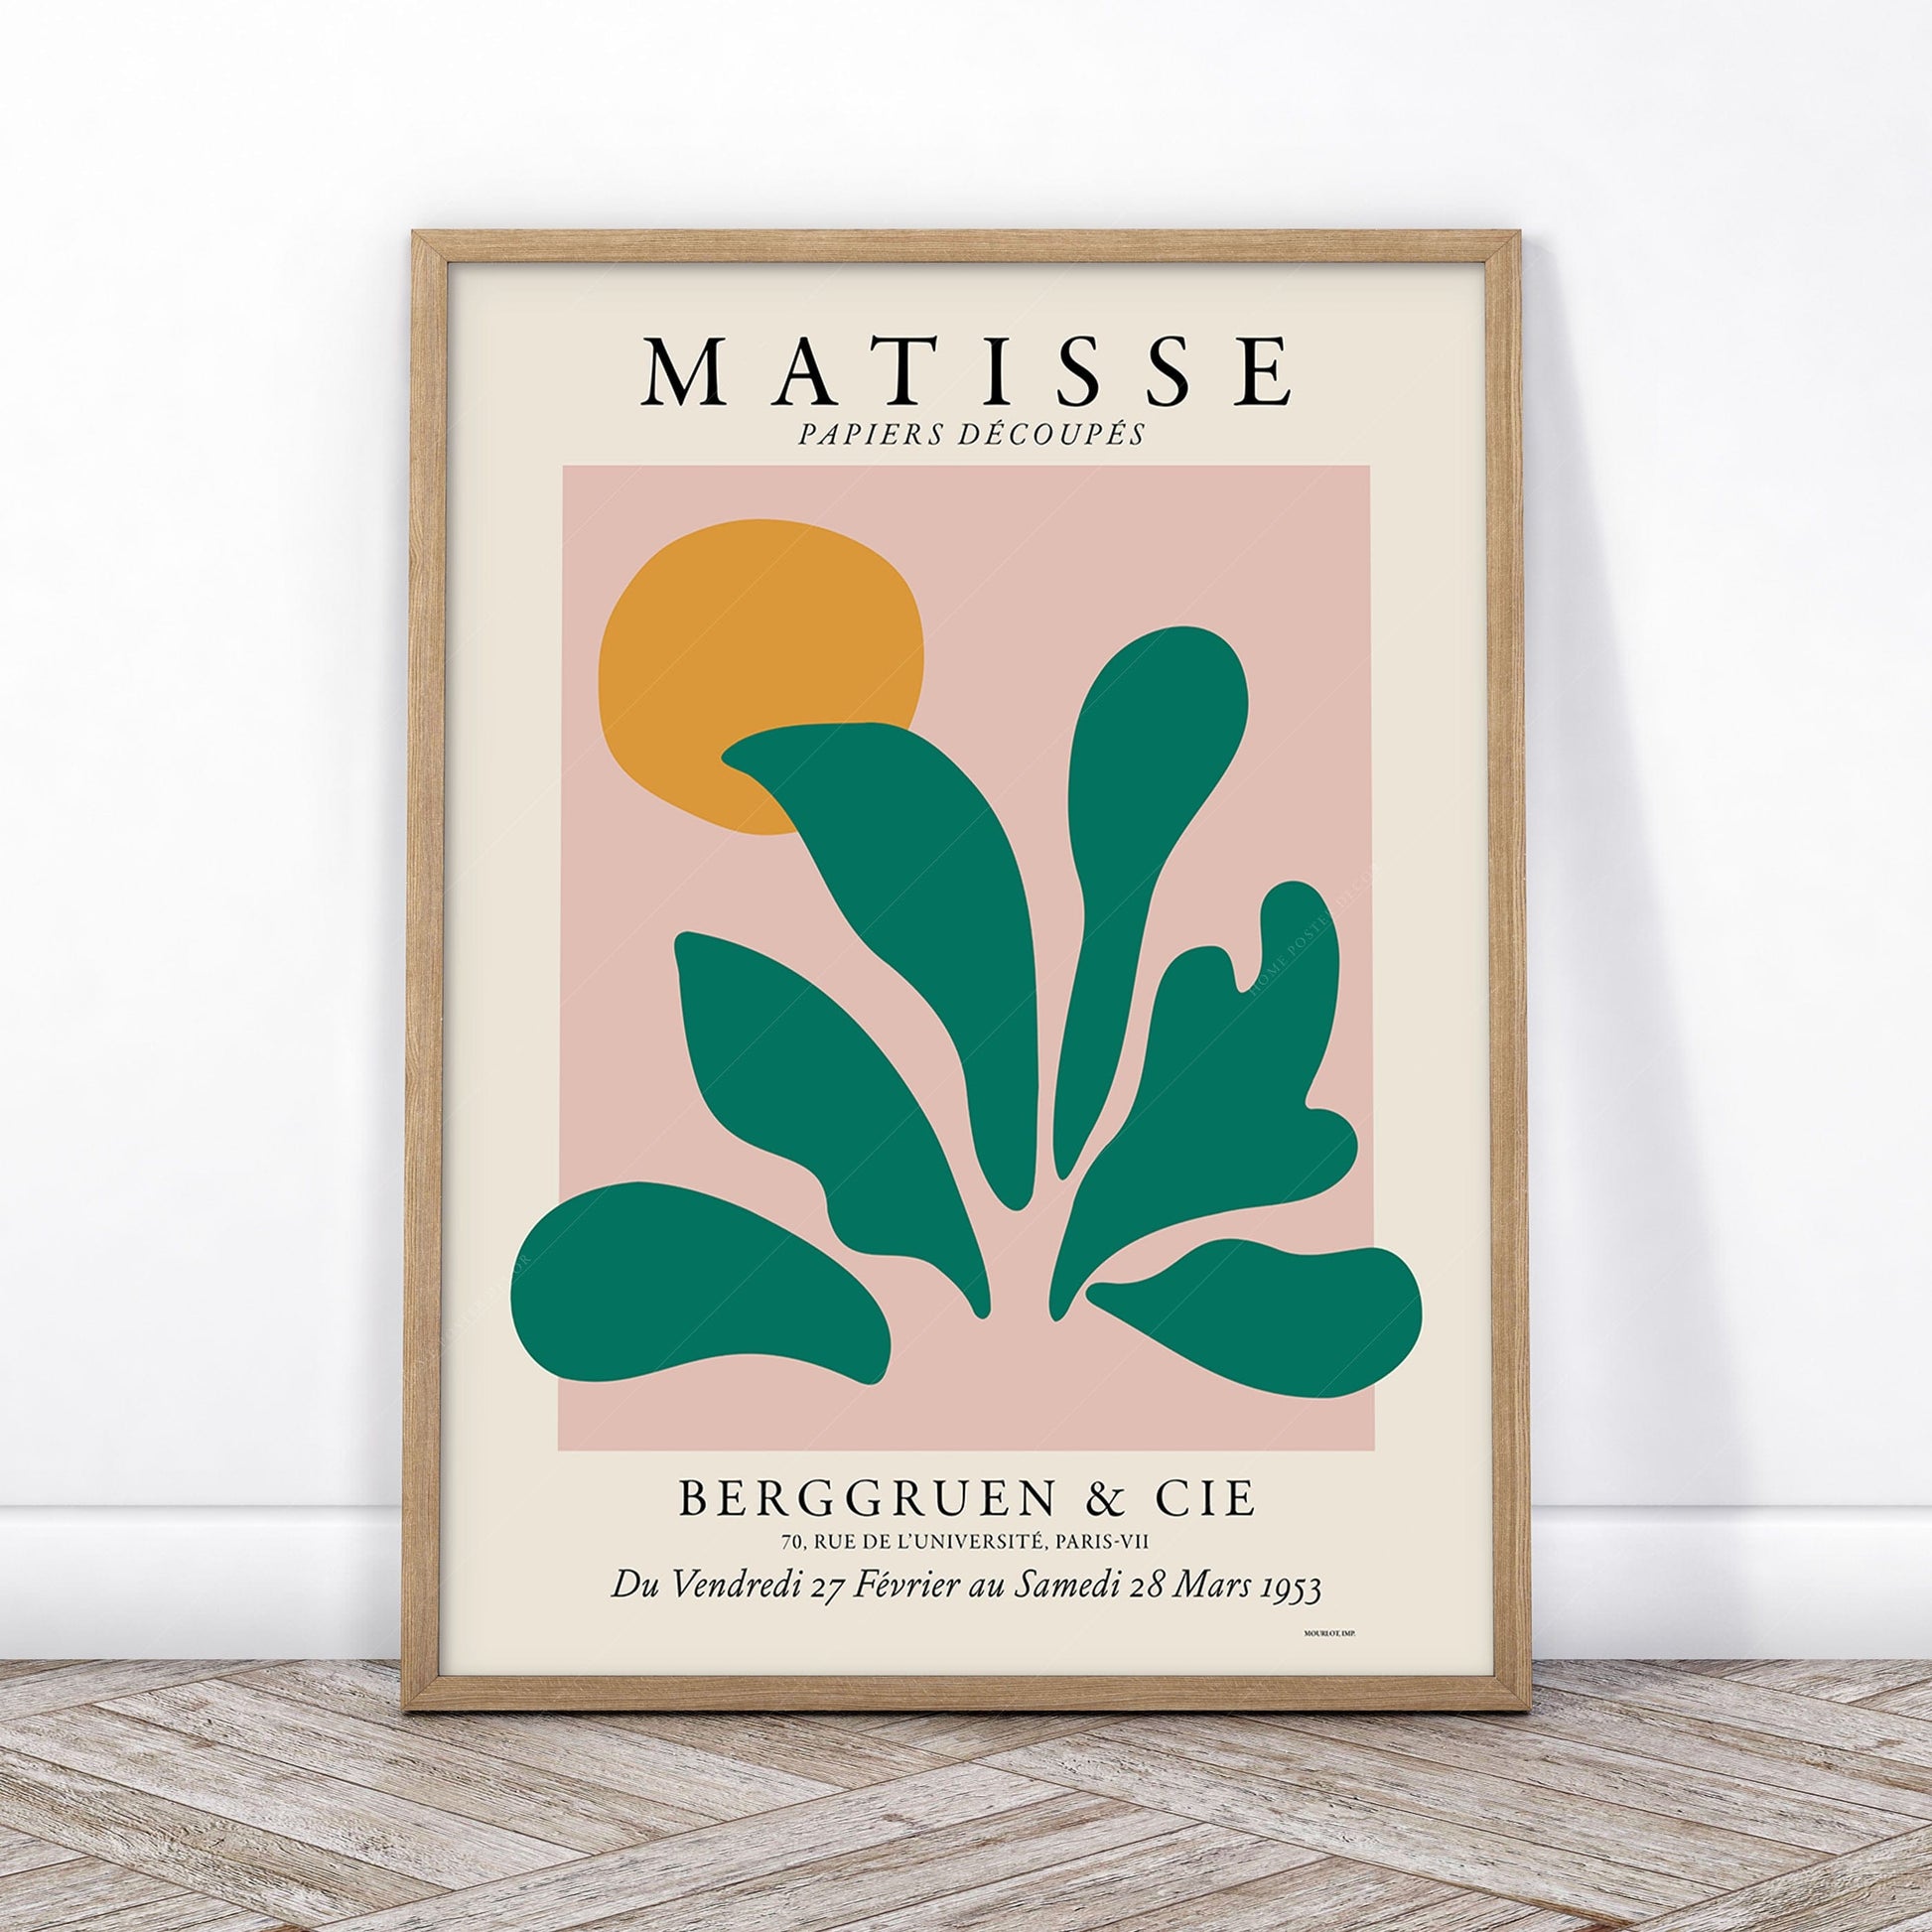 Home Poster Decor Henri Matisse, Modern Gallery Wall, Henri Matisse, Yayoi Kusama, Flower Market New York, Set of 3 Prints